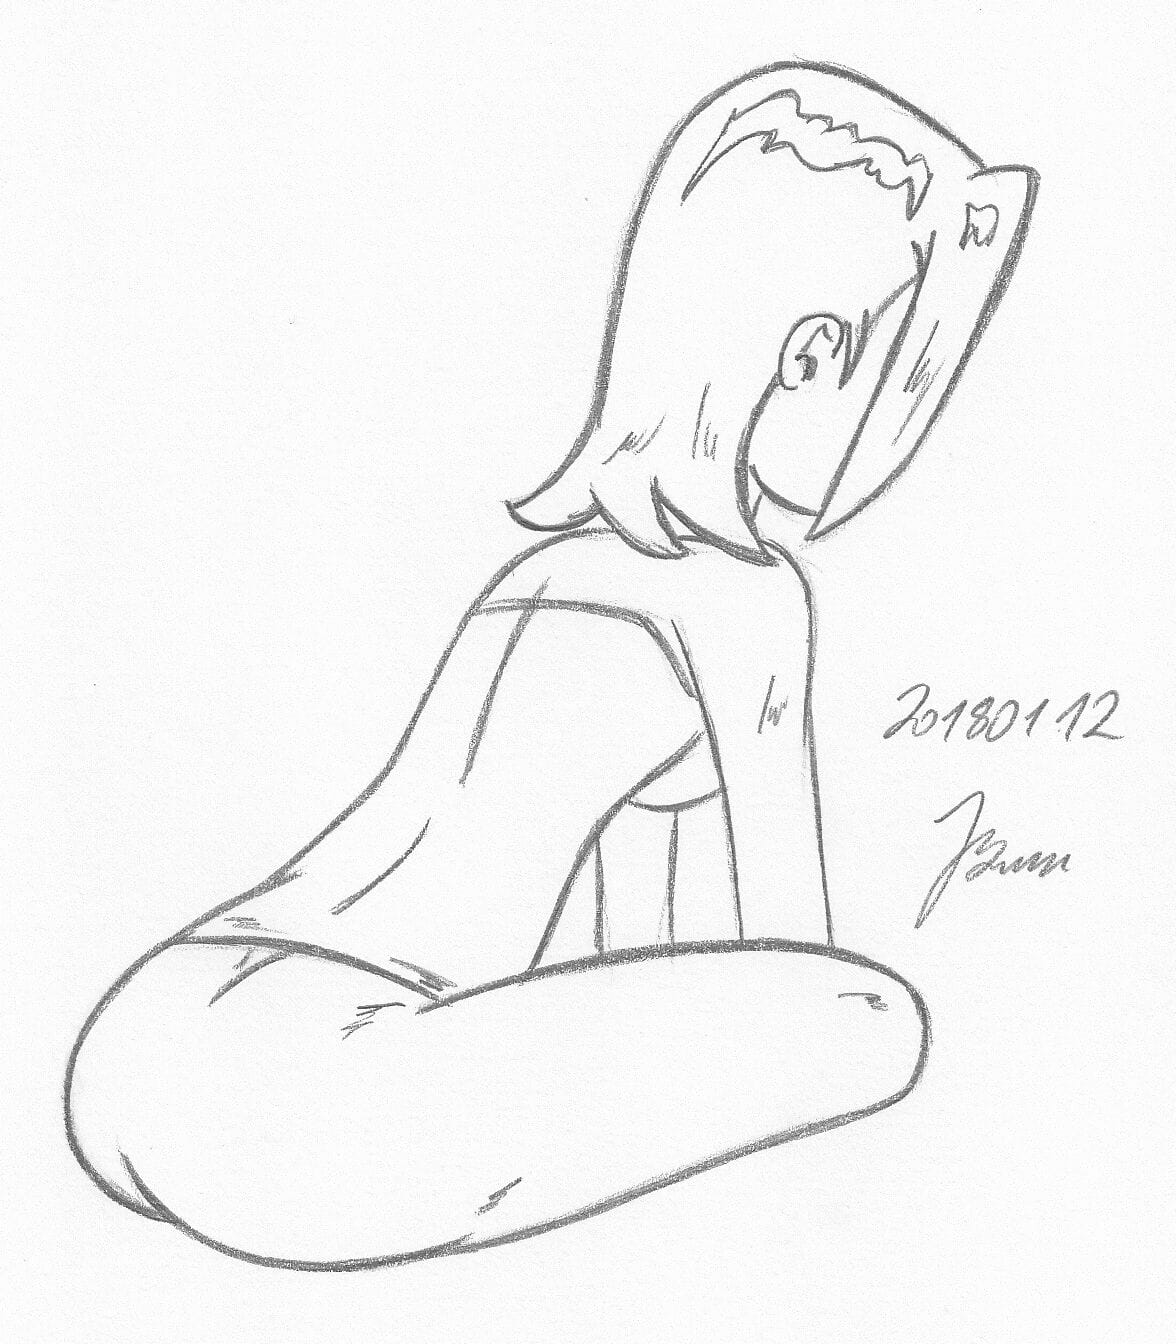 Gwen Tennyson_ ben10_My miny Sketches work_5 - part 2 page 1